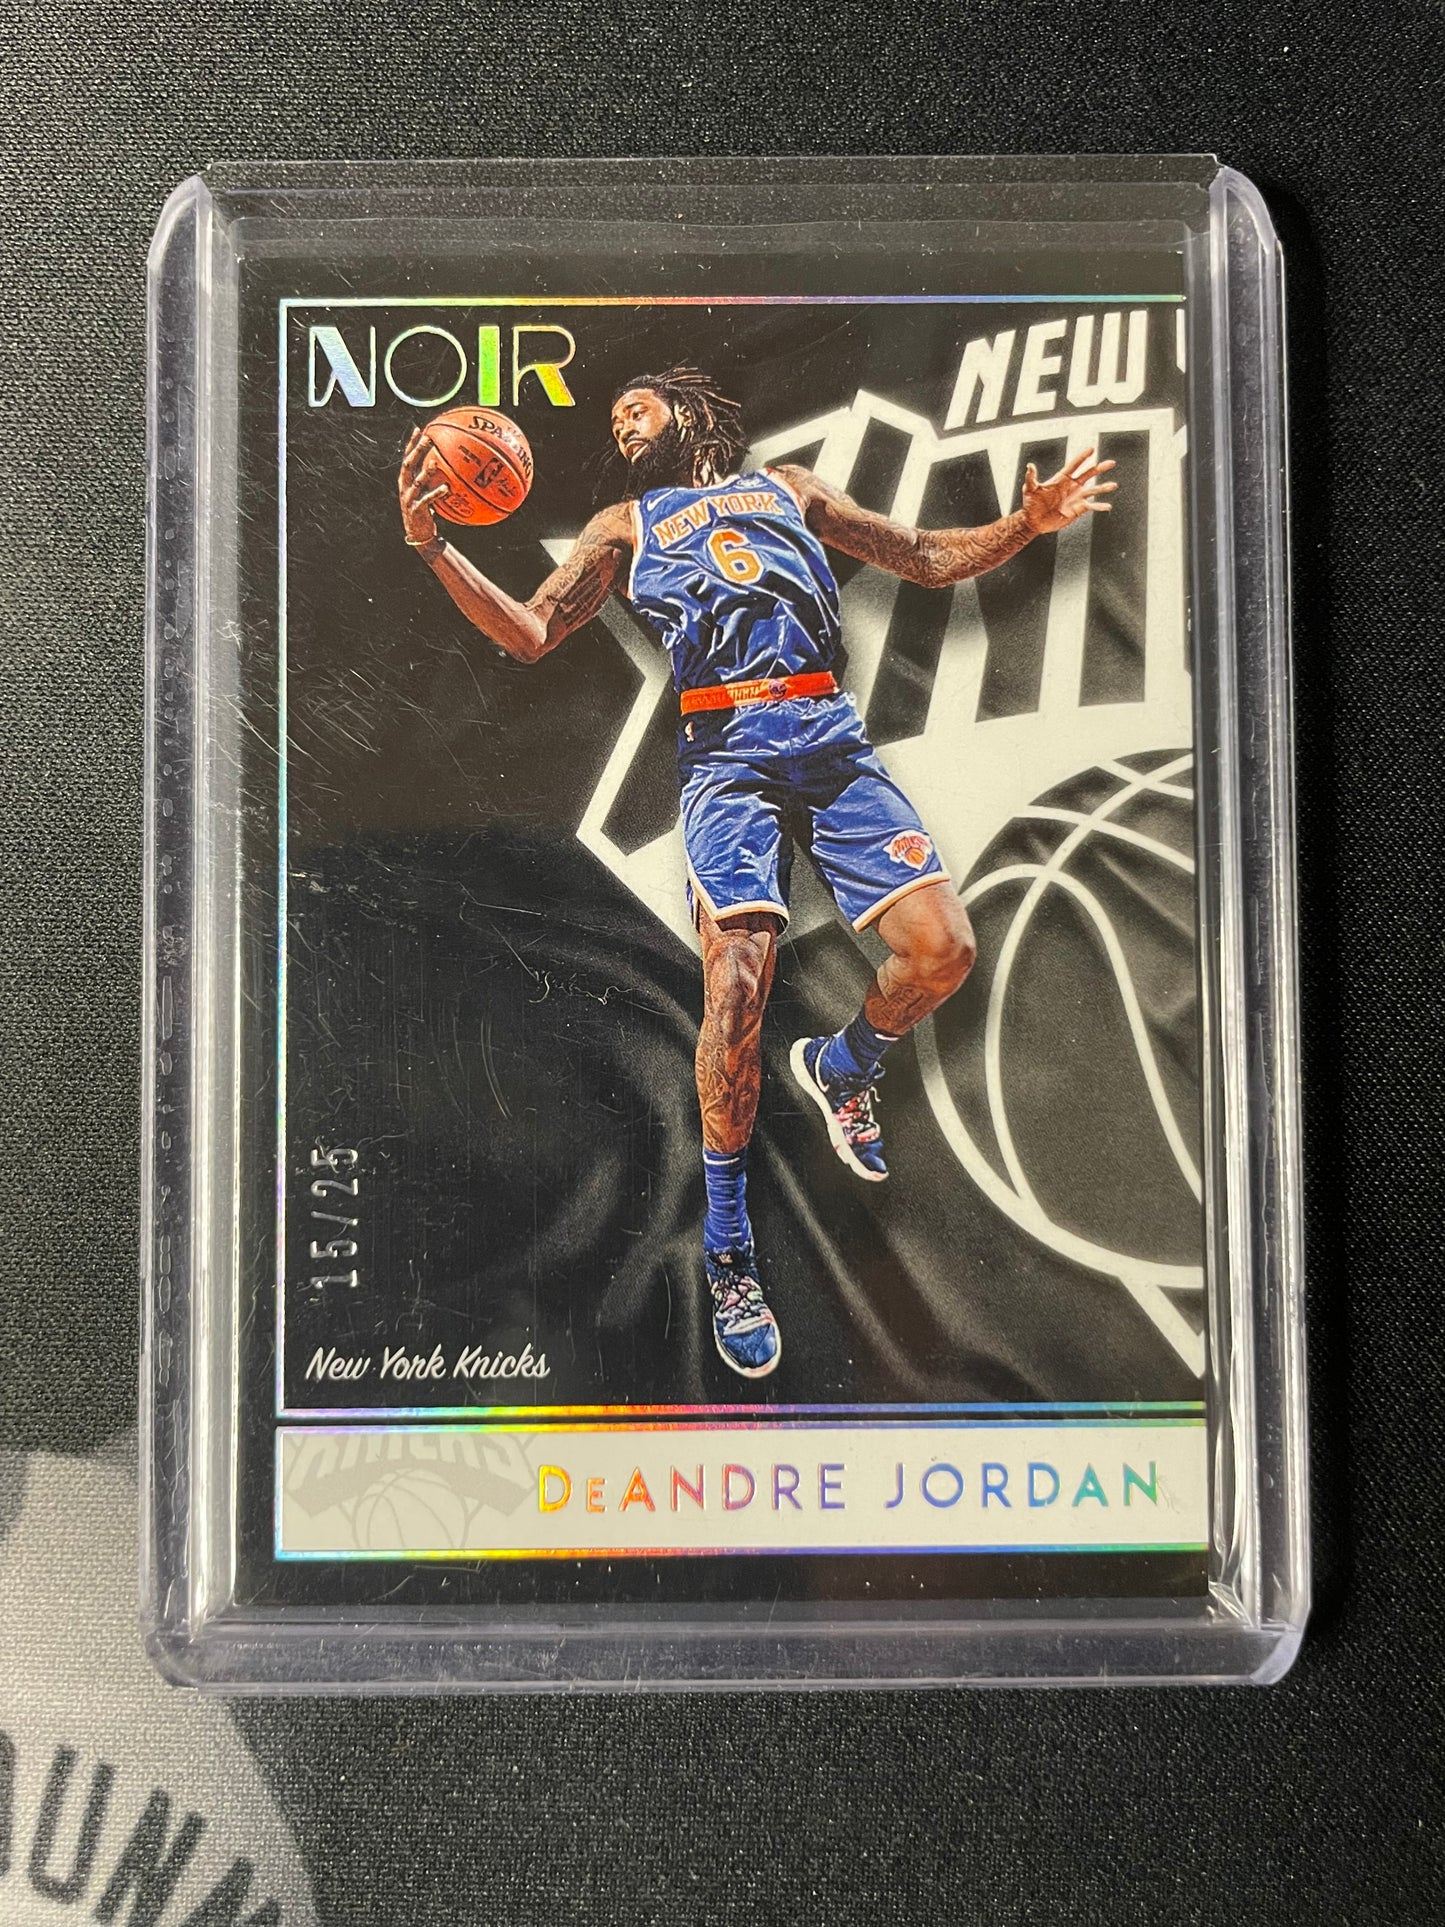 2018/19 Panini Noir #102 Deandre Jordan New York Knicks 15/25 Icon Edition